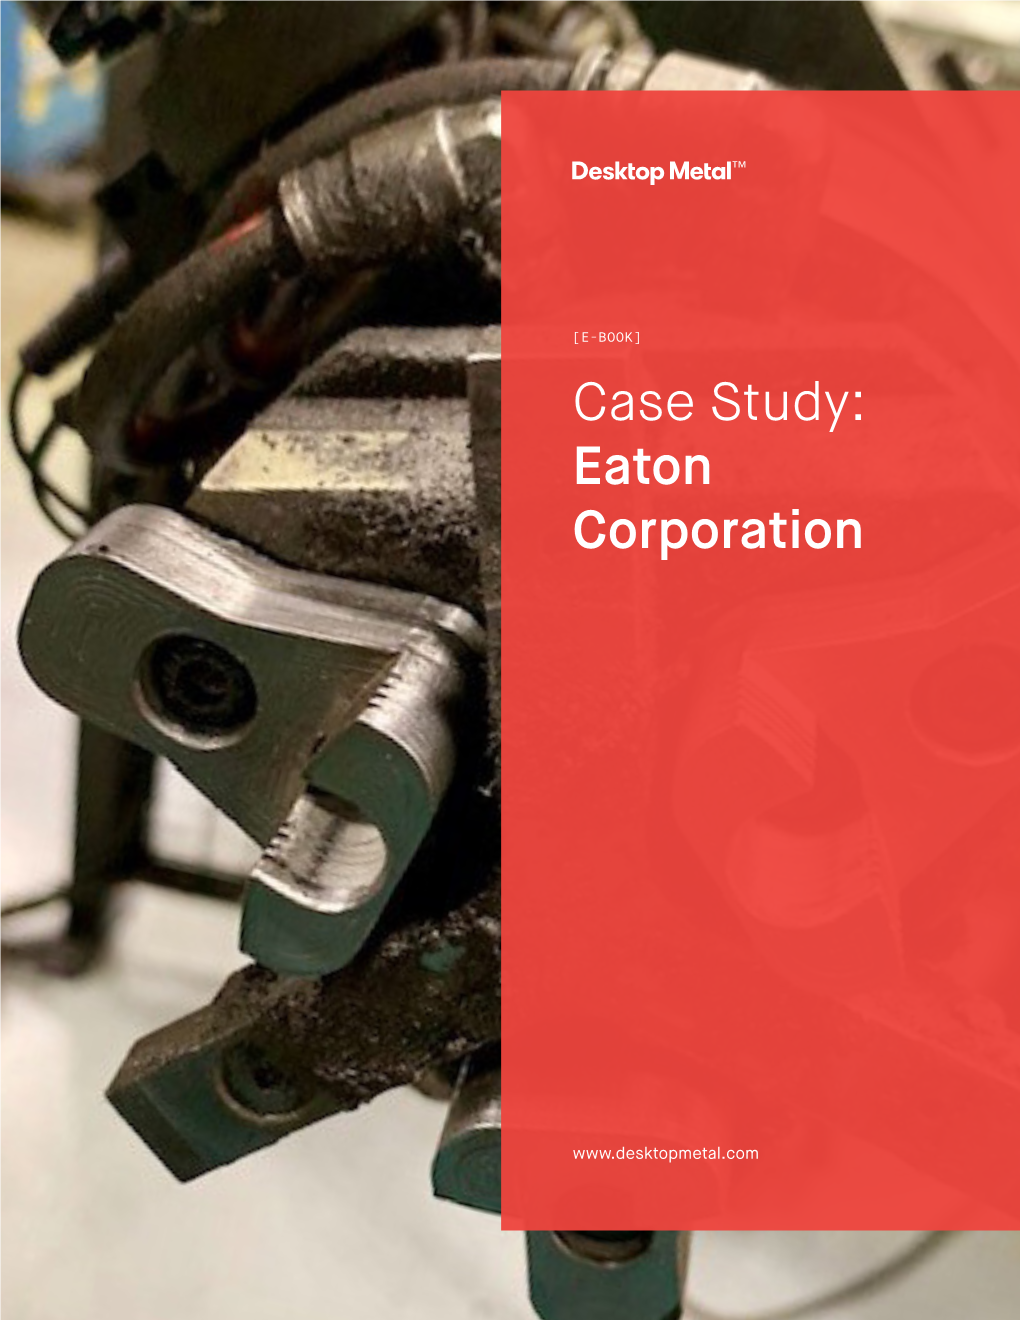 Case Study: Eaton Corporation